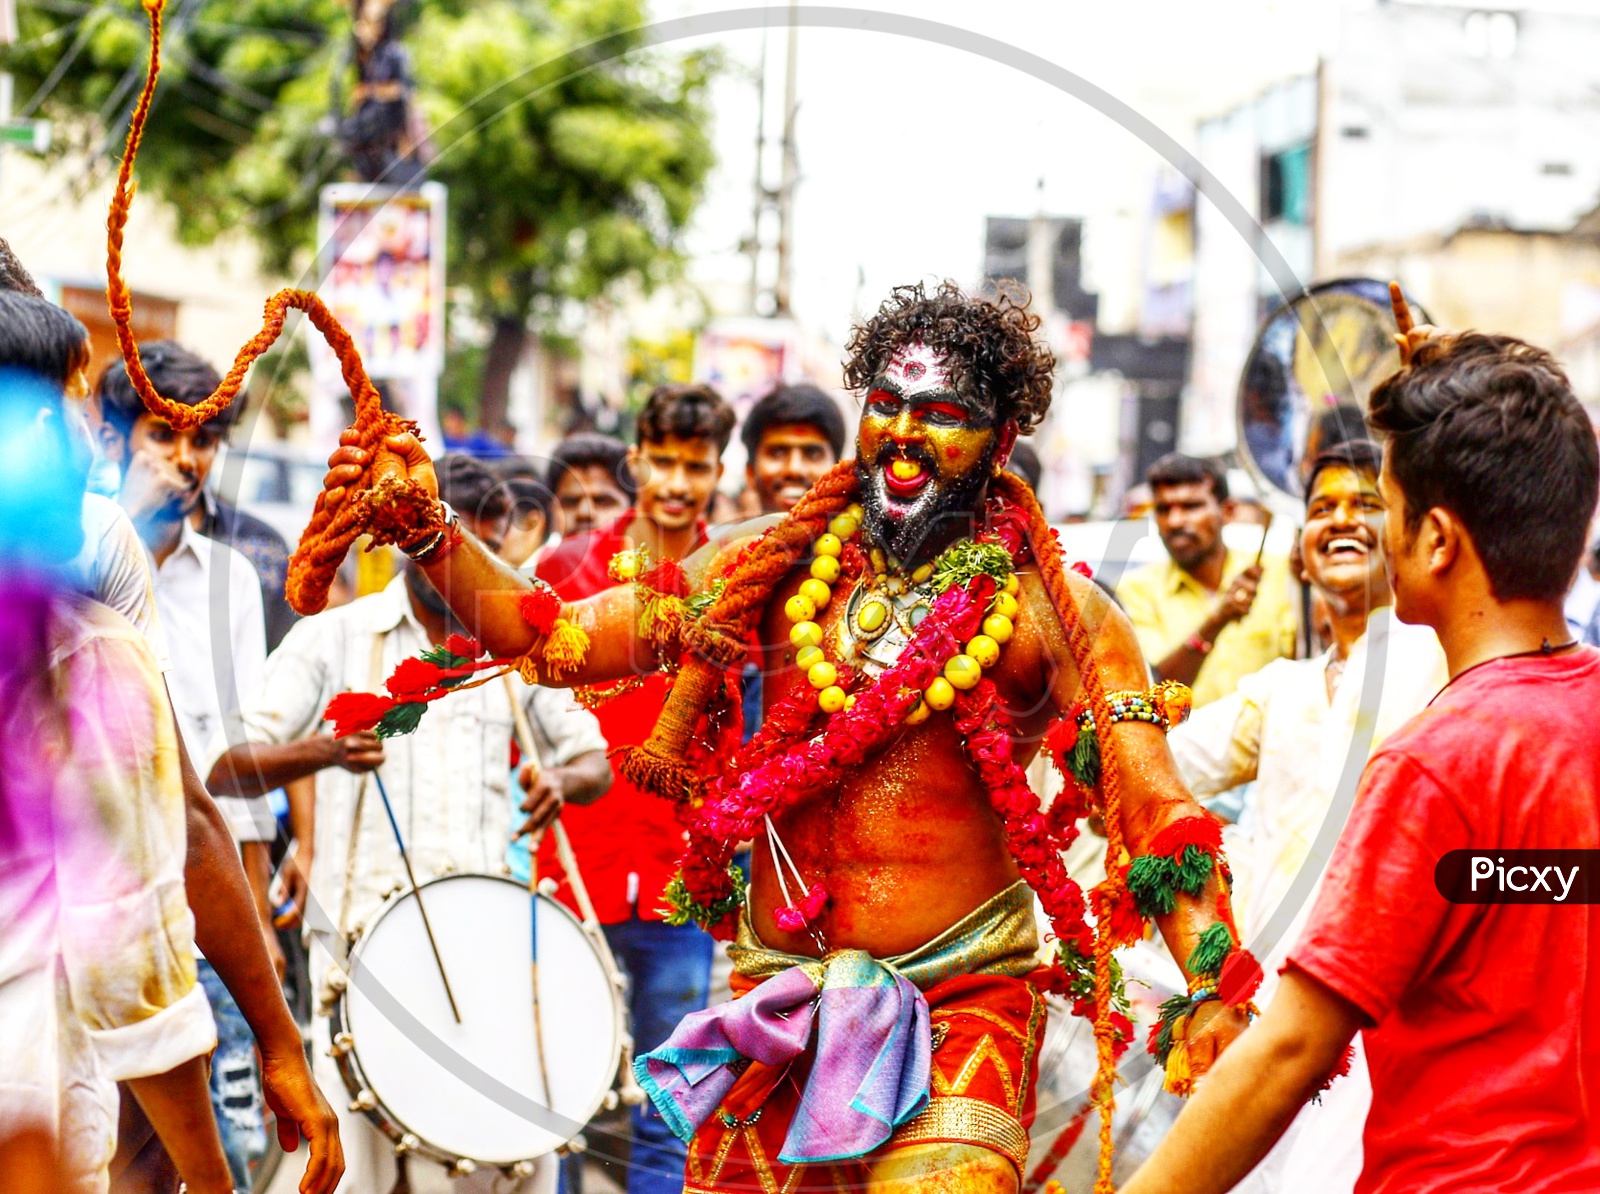 Pothuraju  Dancing at a Bonalu Procession  In Hyderabad